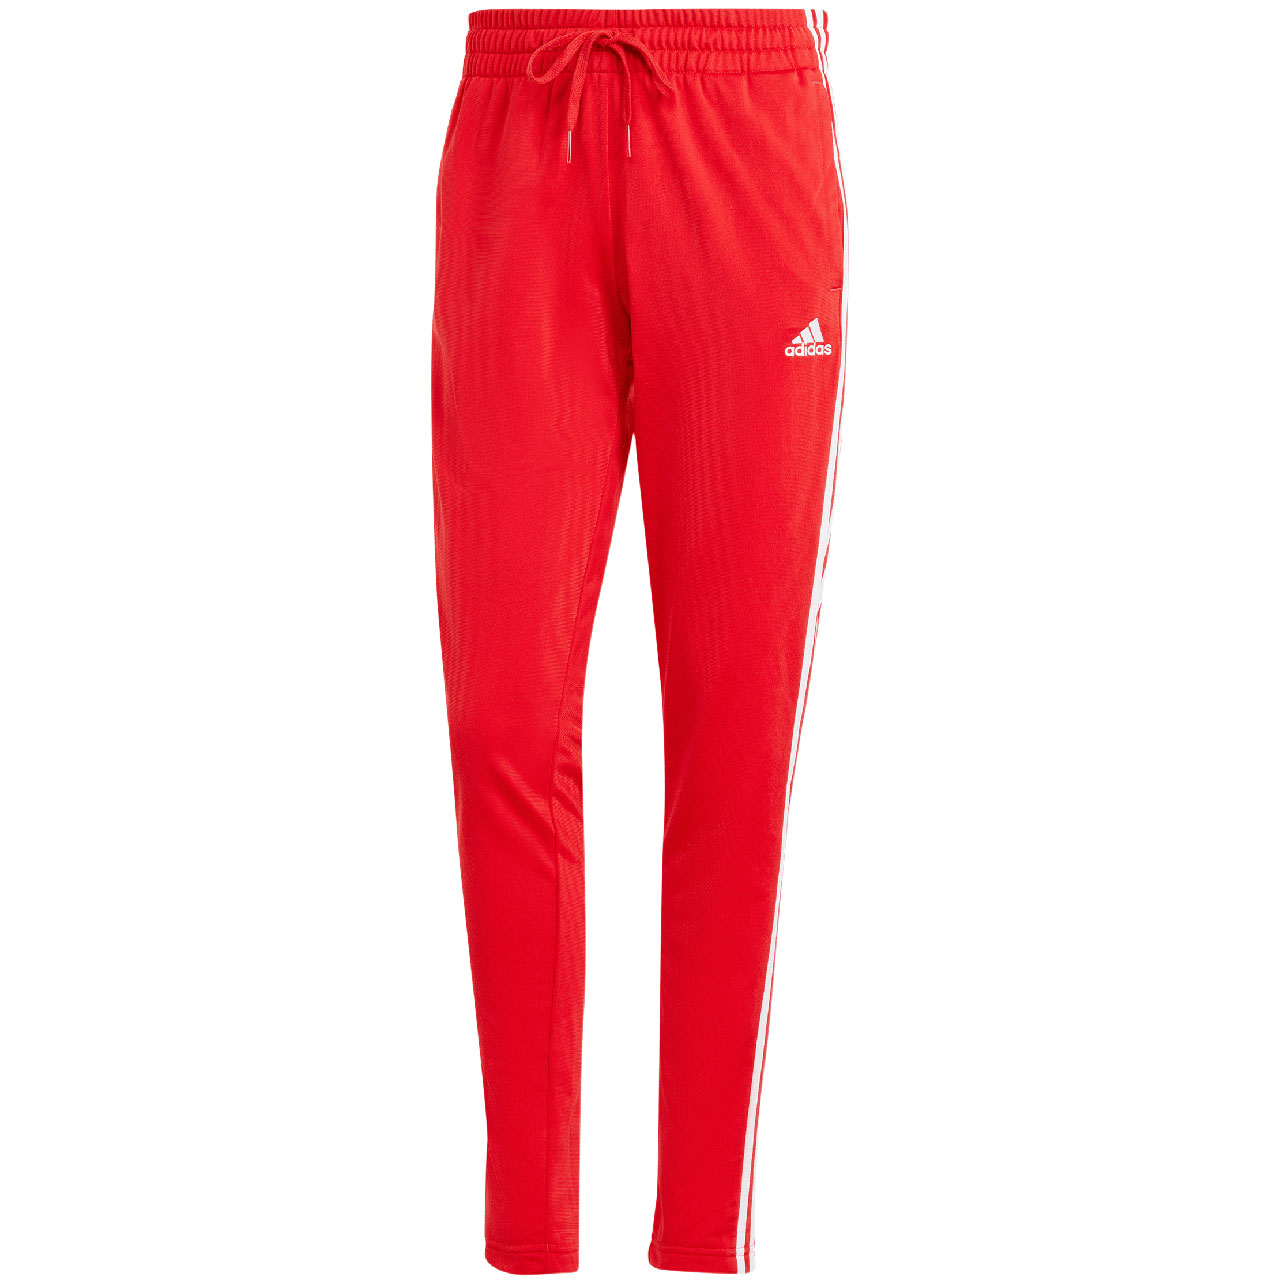 Nohavice Adidas Essentials 3-Stripes červené IJ8784 VEĽ. L